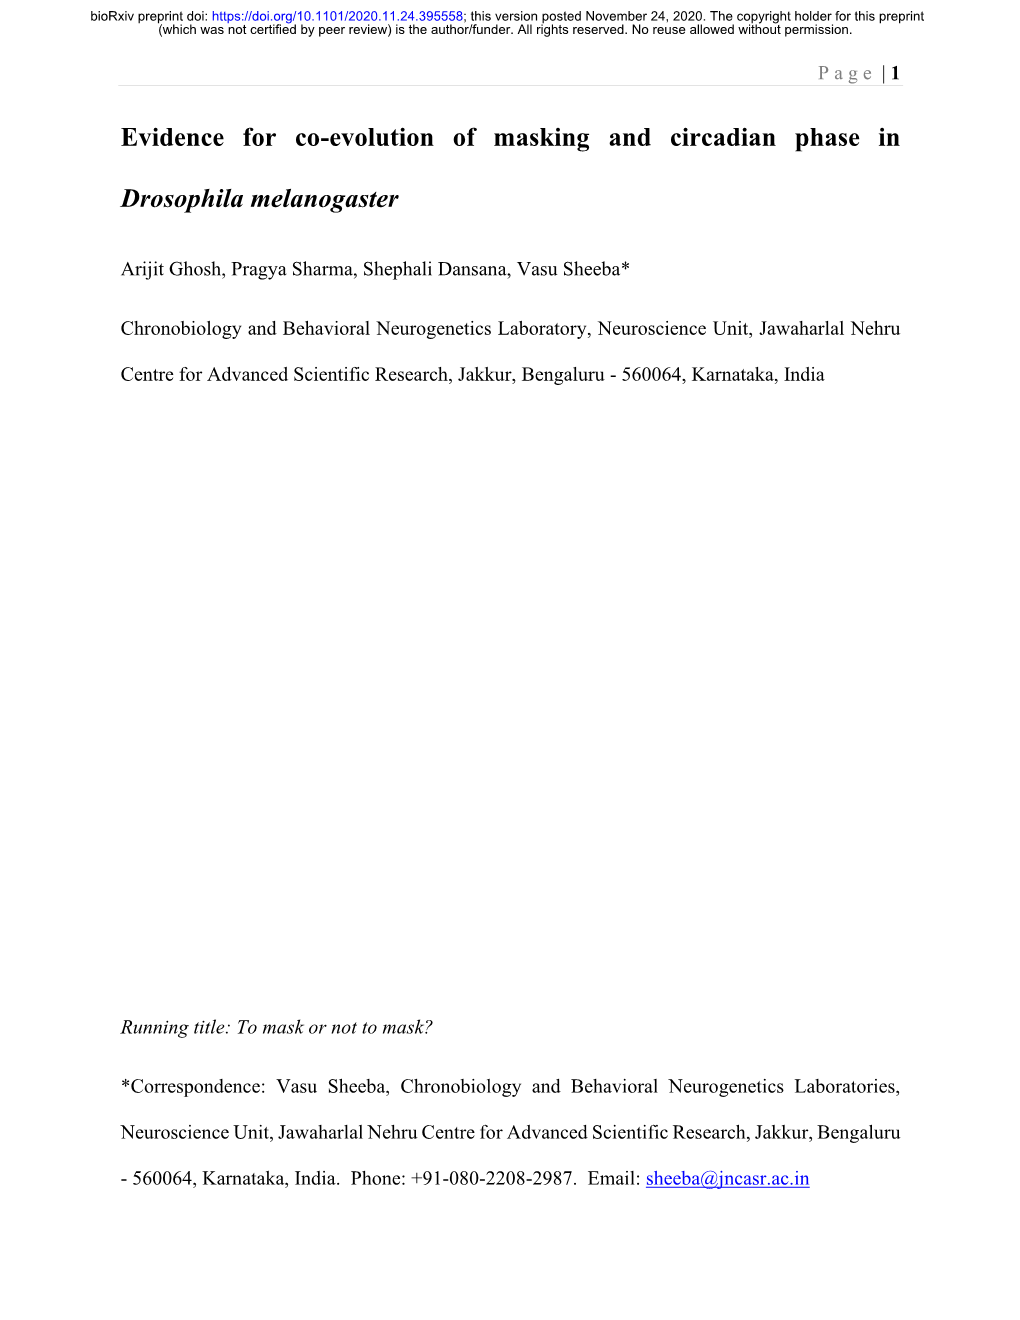 Evidence for Co-Evolution of Masking and Circadian Phase in Drosophila Melanogaster